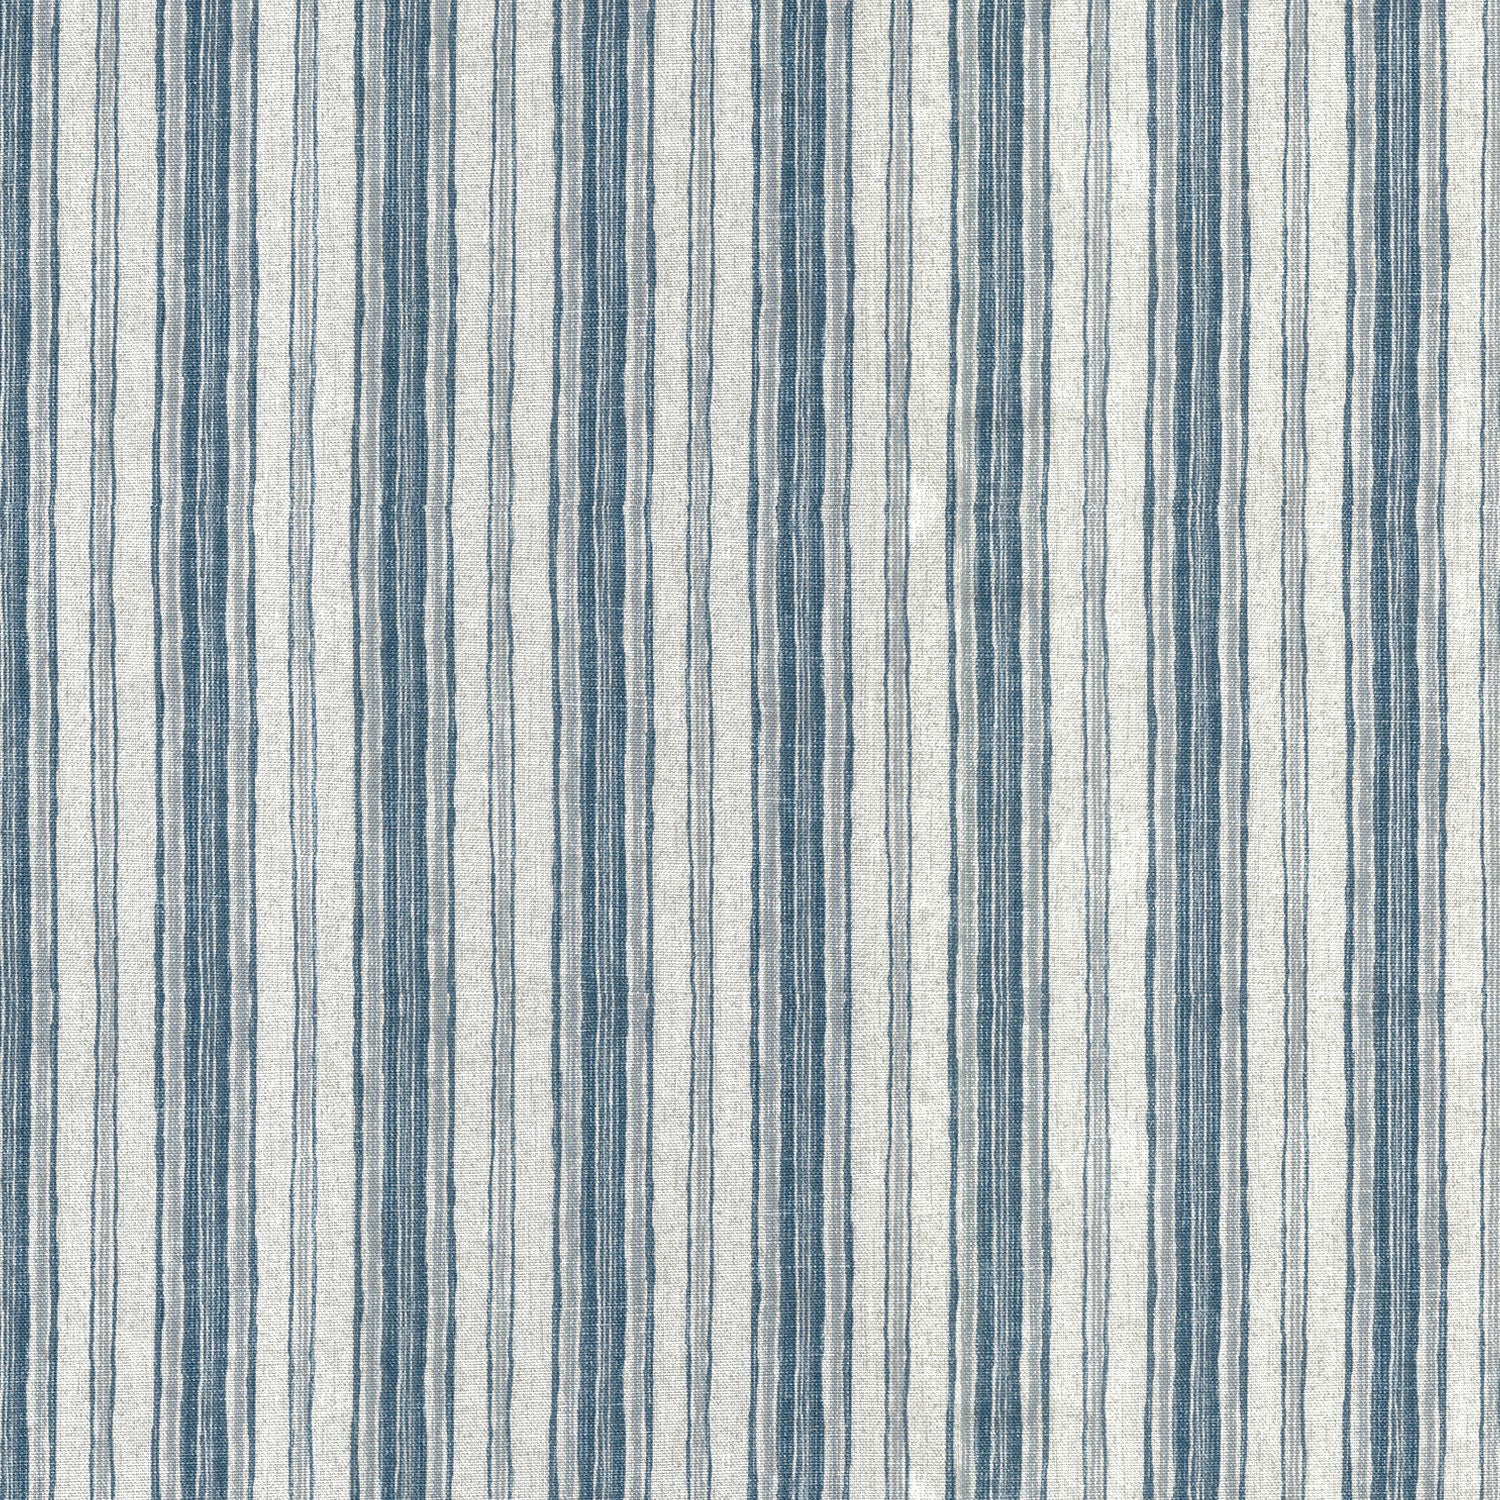 tailored bedskirt in brunswick denim blue stripe